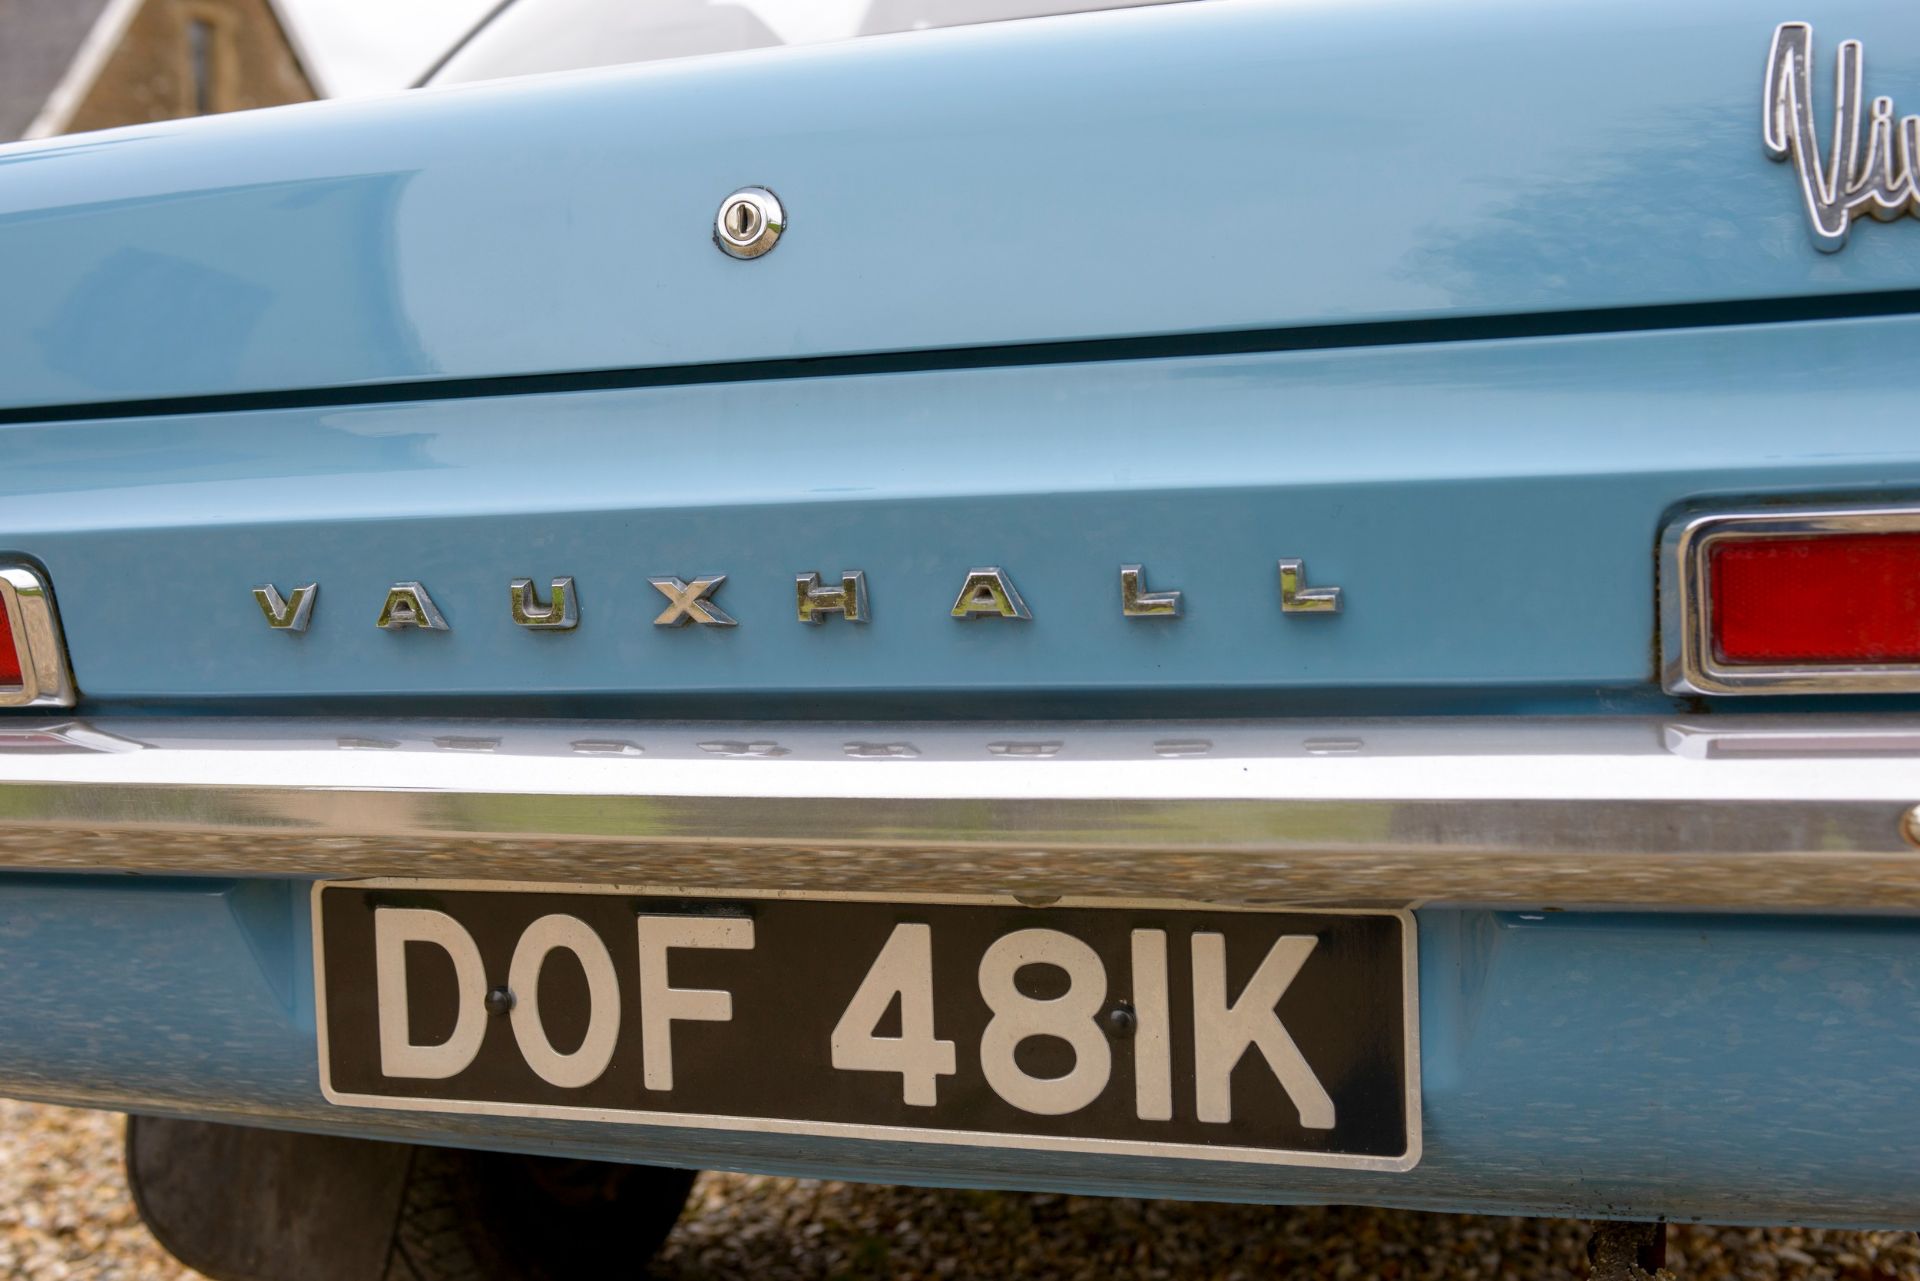 1972 VAUXHALL VIVA HC Registration Number: DOF 481K Chassis Number: 931112E174253 Recorded - Image 18 of 33